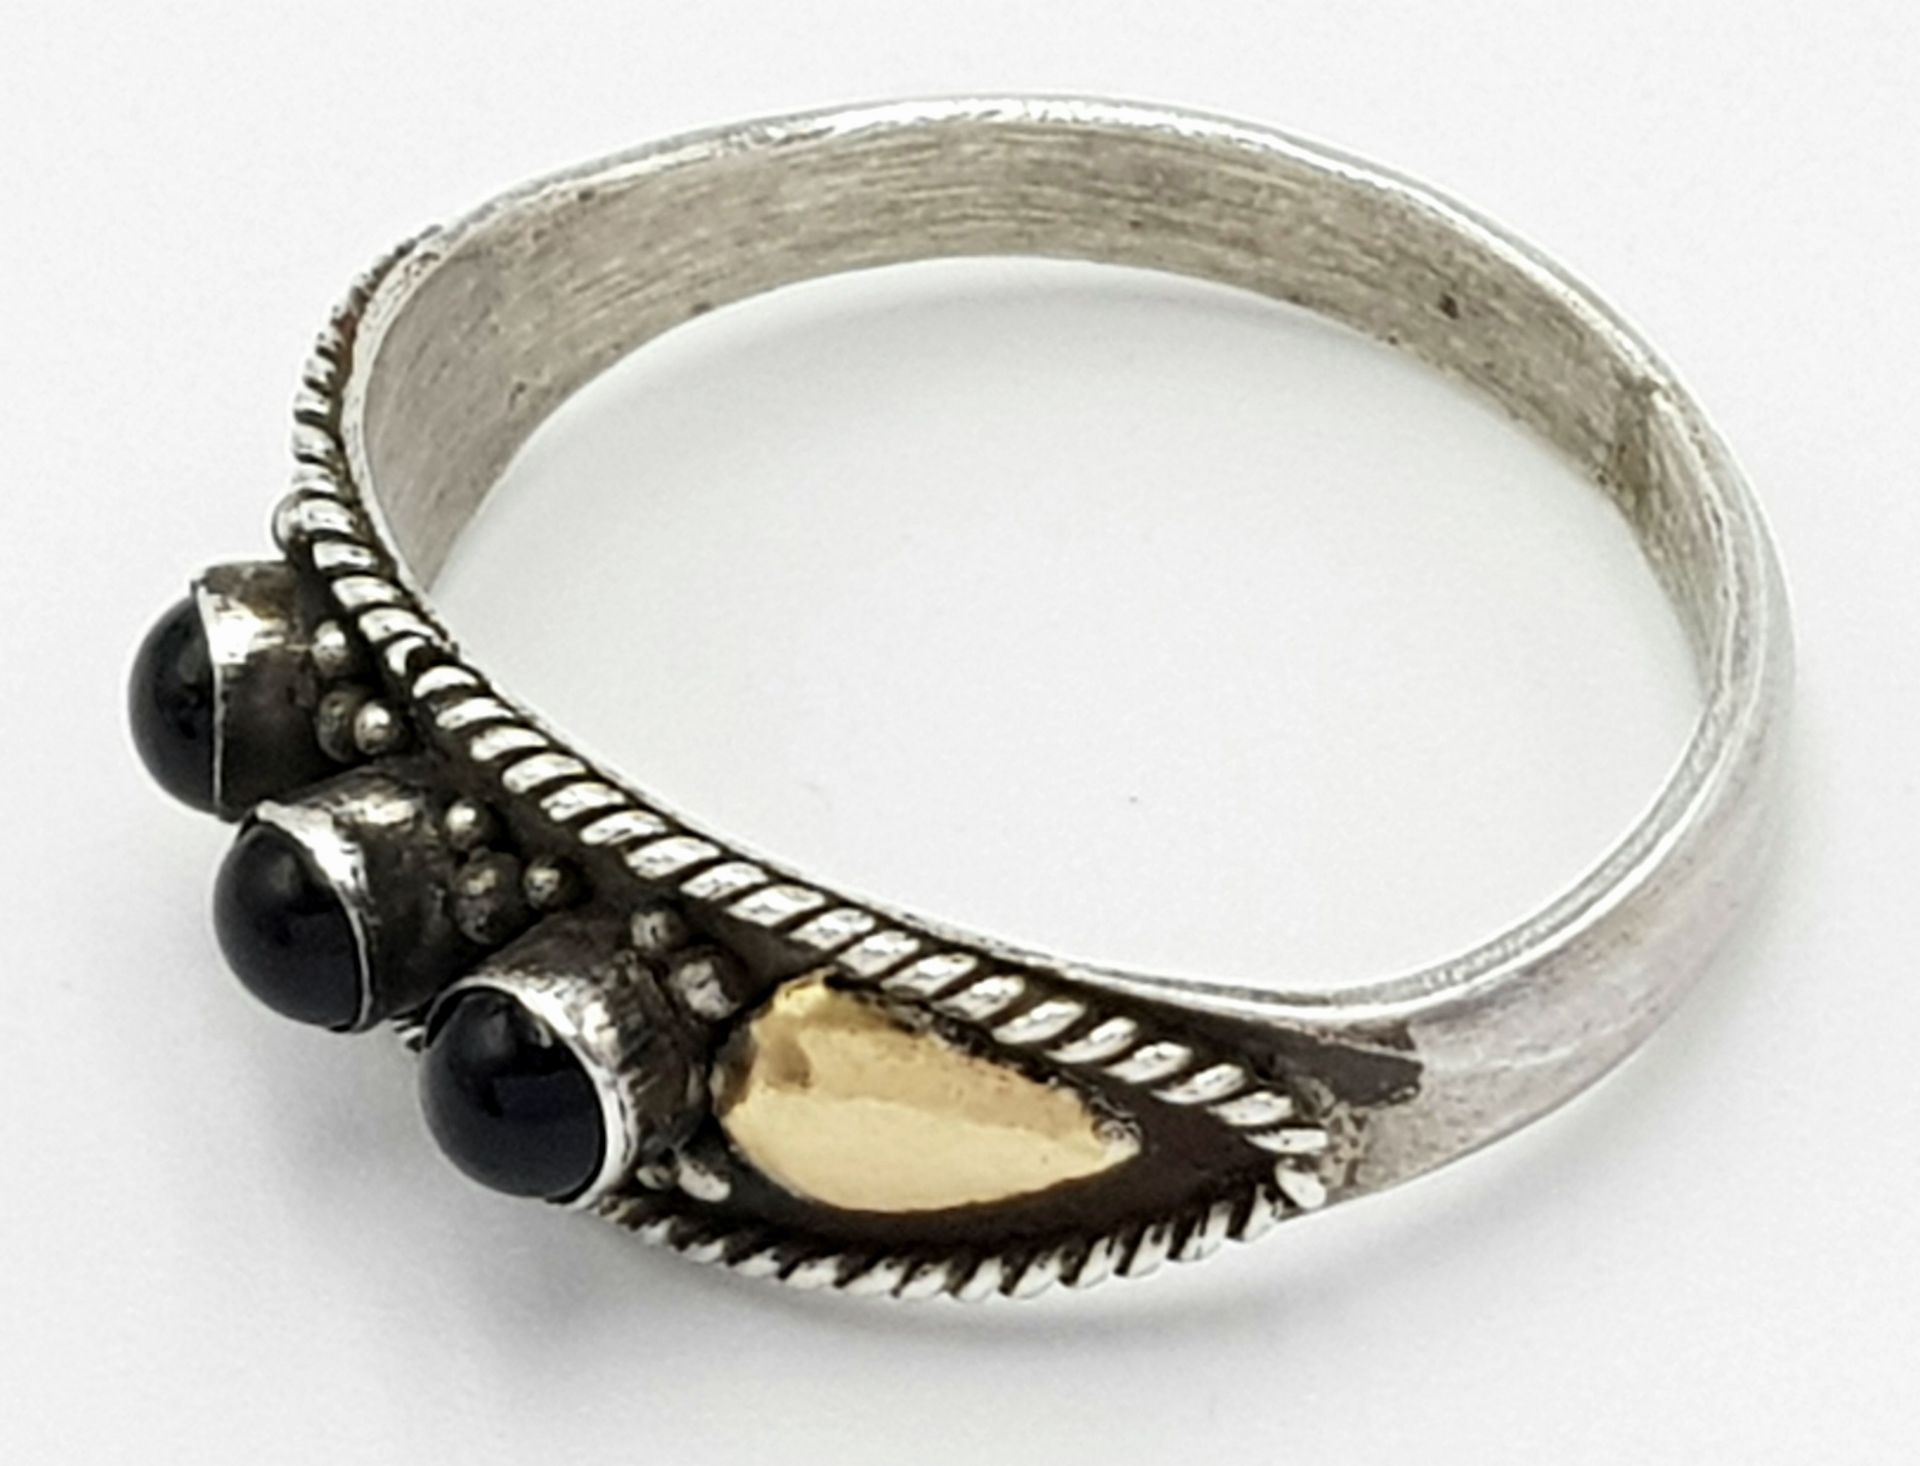 A Vintage or Older, Gold on Sterling Silver, Black Onyx Cabachon Set Ring. Size O. Measures 7mm Wide - Image 3 of 5